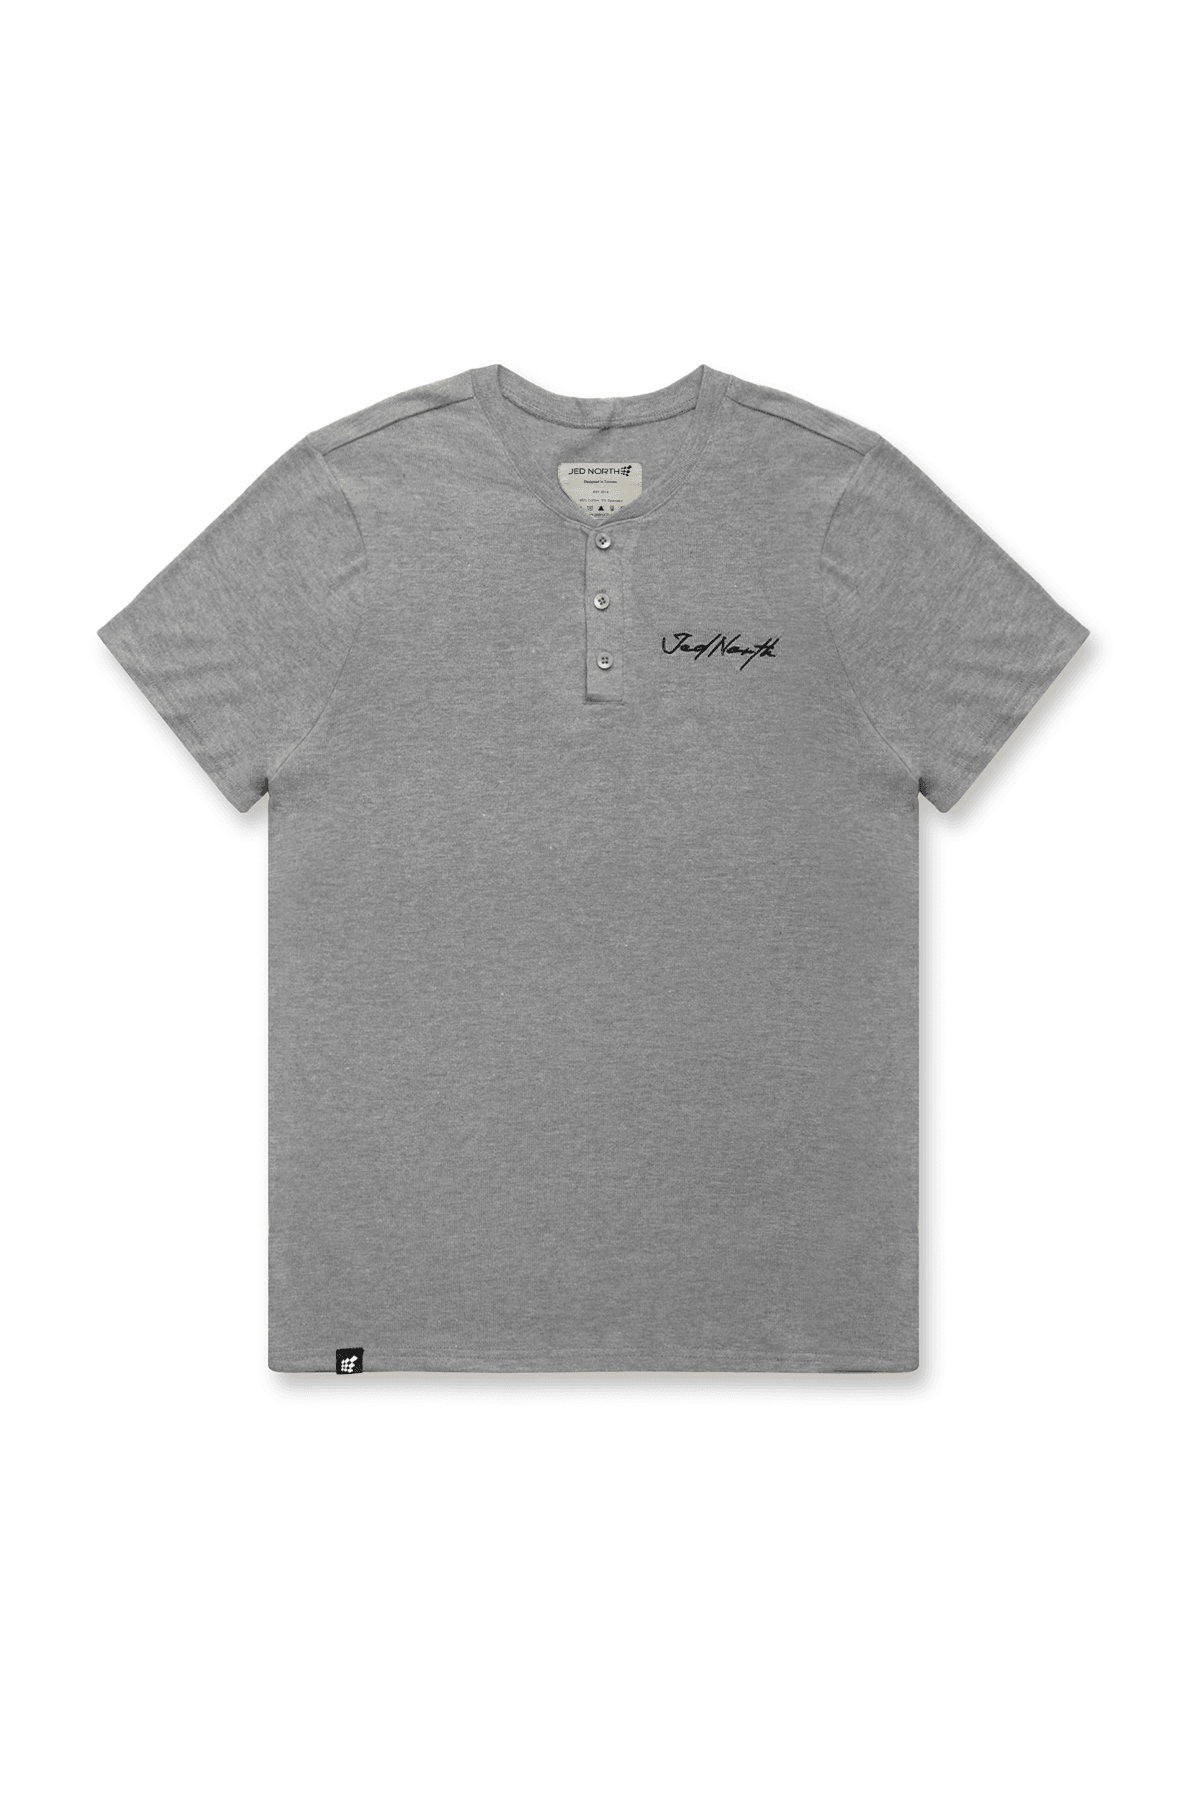 RYRJJ Mens Henley Shirts Long Sleeve T Shirt Fashion Casual Slim Fit  Lightweight Basic Plain Pullover Tee Shirts(Dark Gray,3XL) 